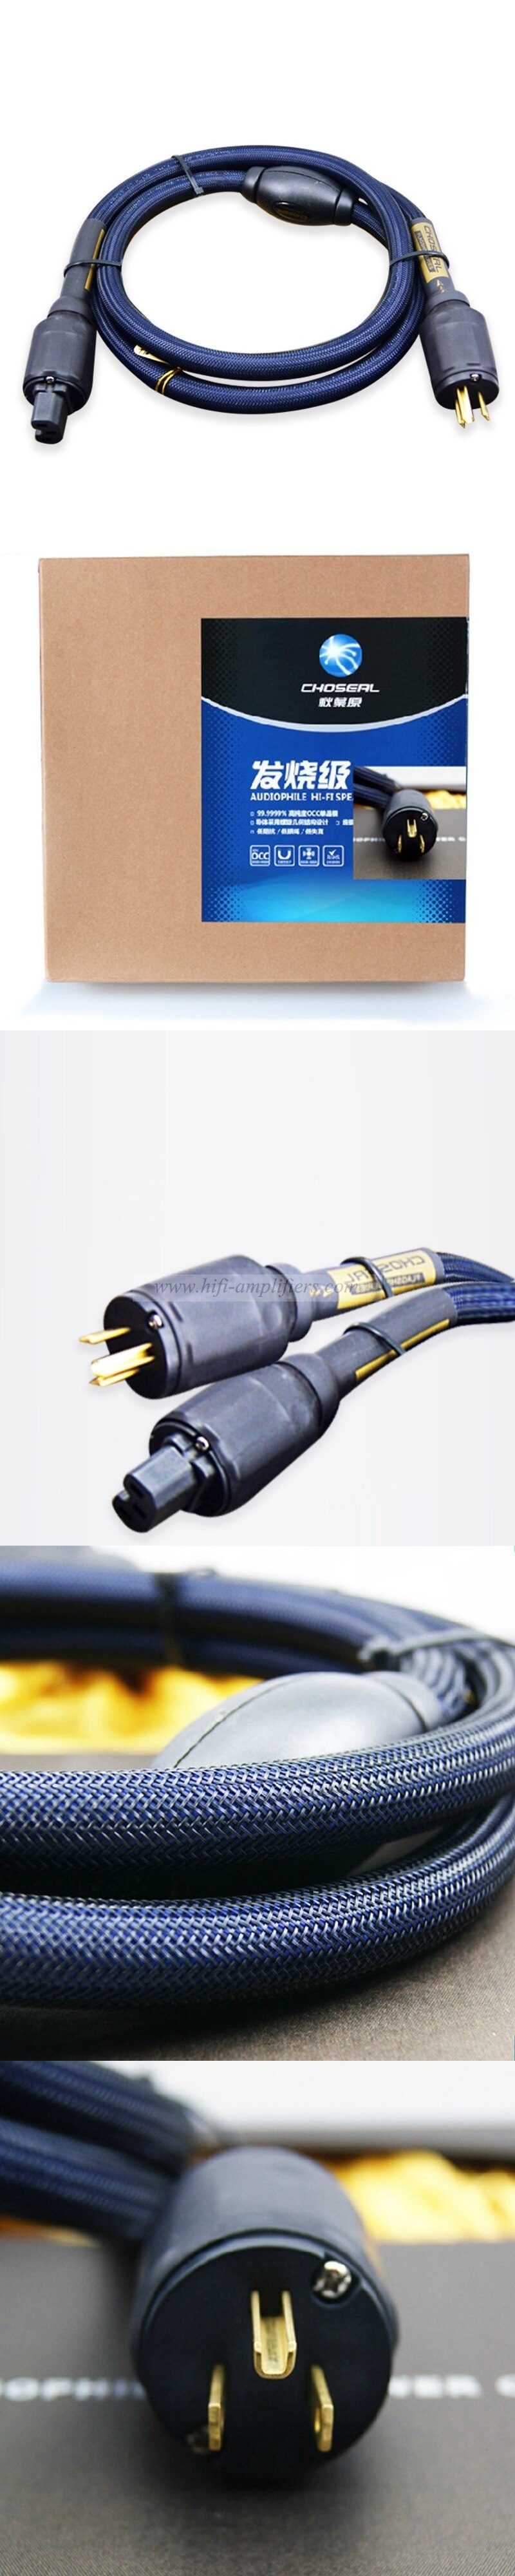 Choseal PB-5702 Audiophile 6N Cable de alimentación de cobre Cable de audio Enchufes de EE. UU.